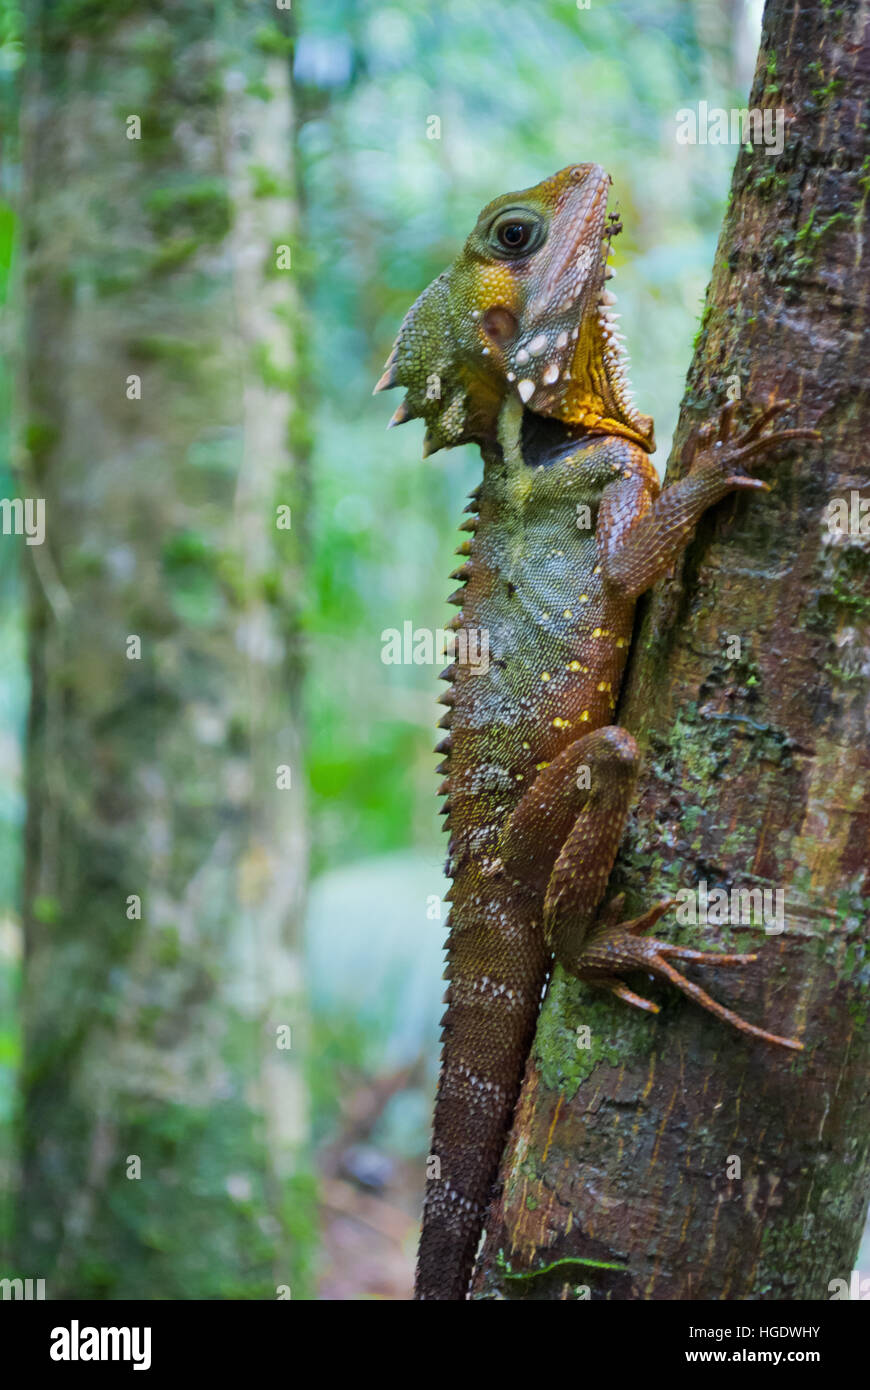 Australian lizard in a tropical rainforest Stock Photo